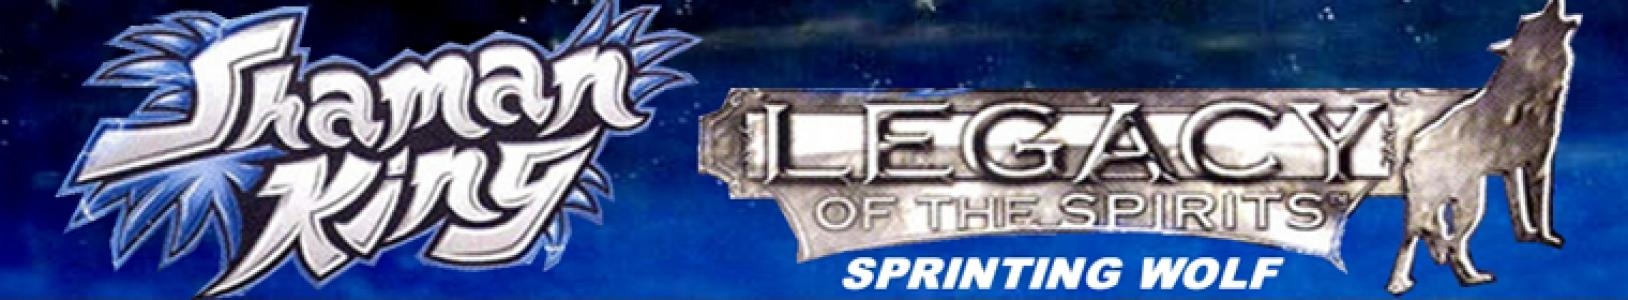 Shonen Jump's Shaman King: Legacy of the Spirits, Sprinting Wolf banner